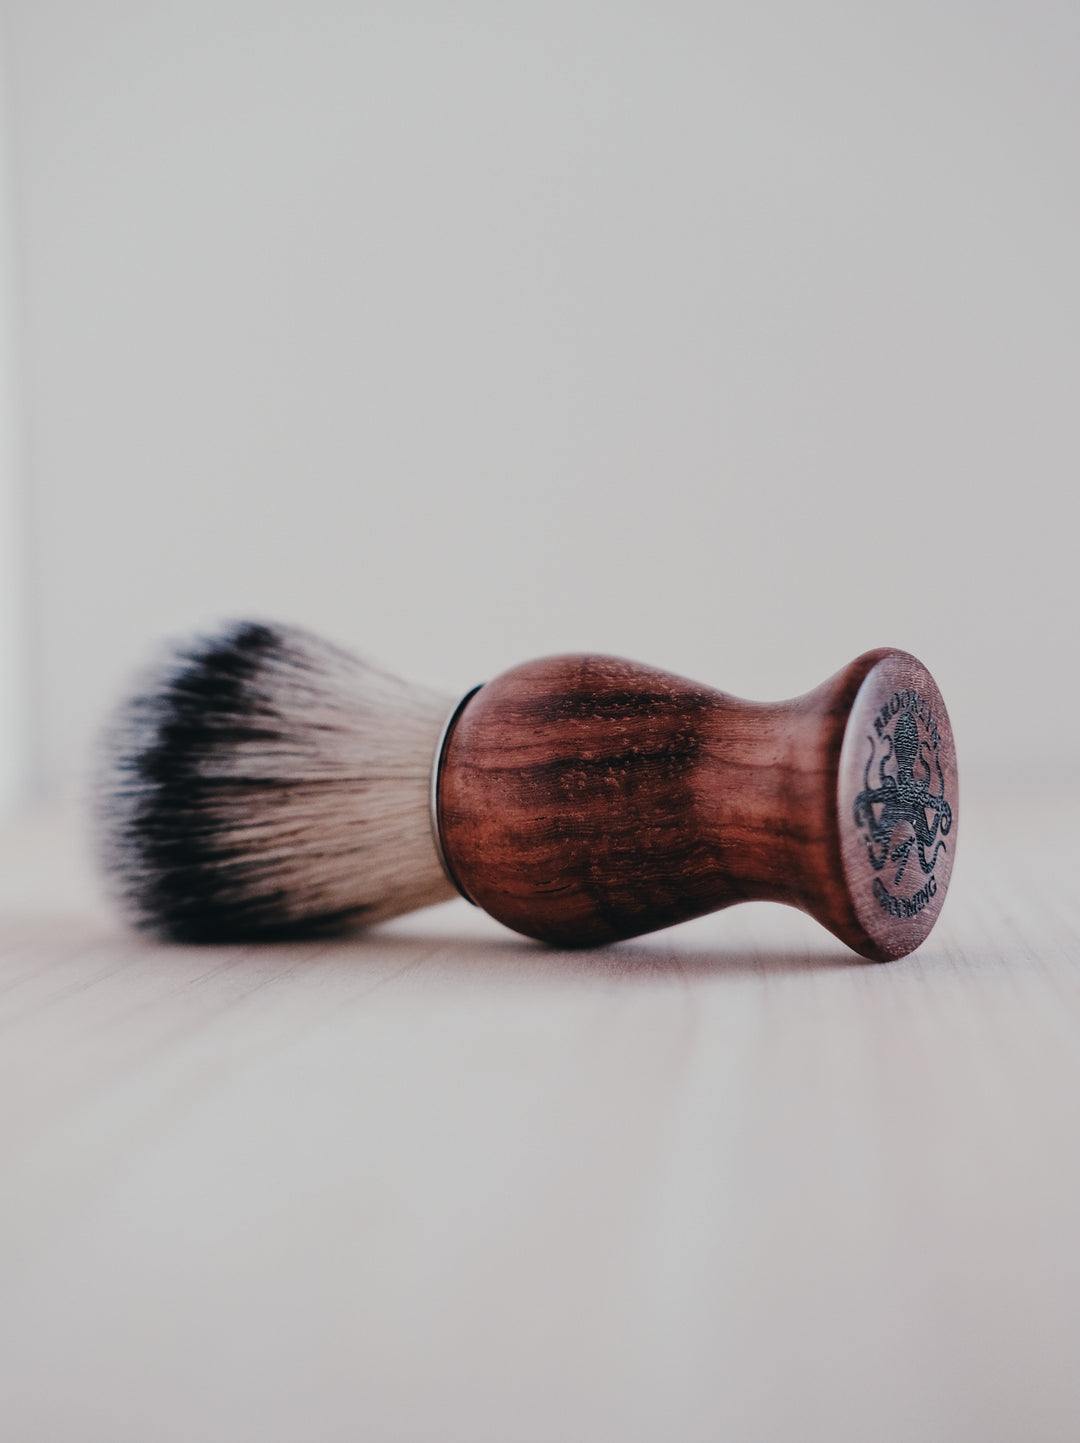 Rosewood Shaving Brush